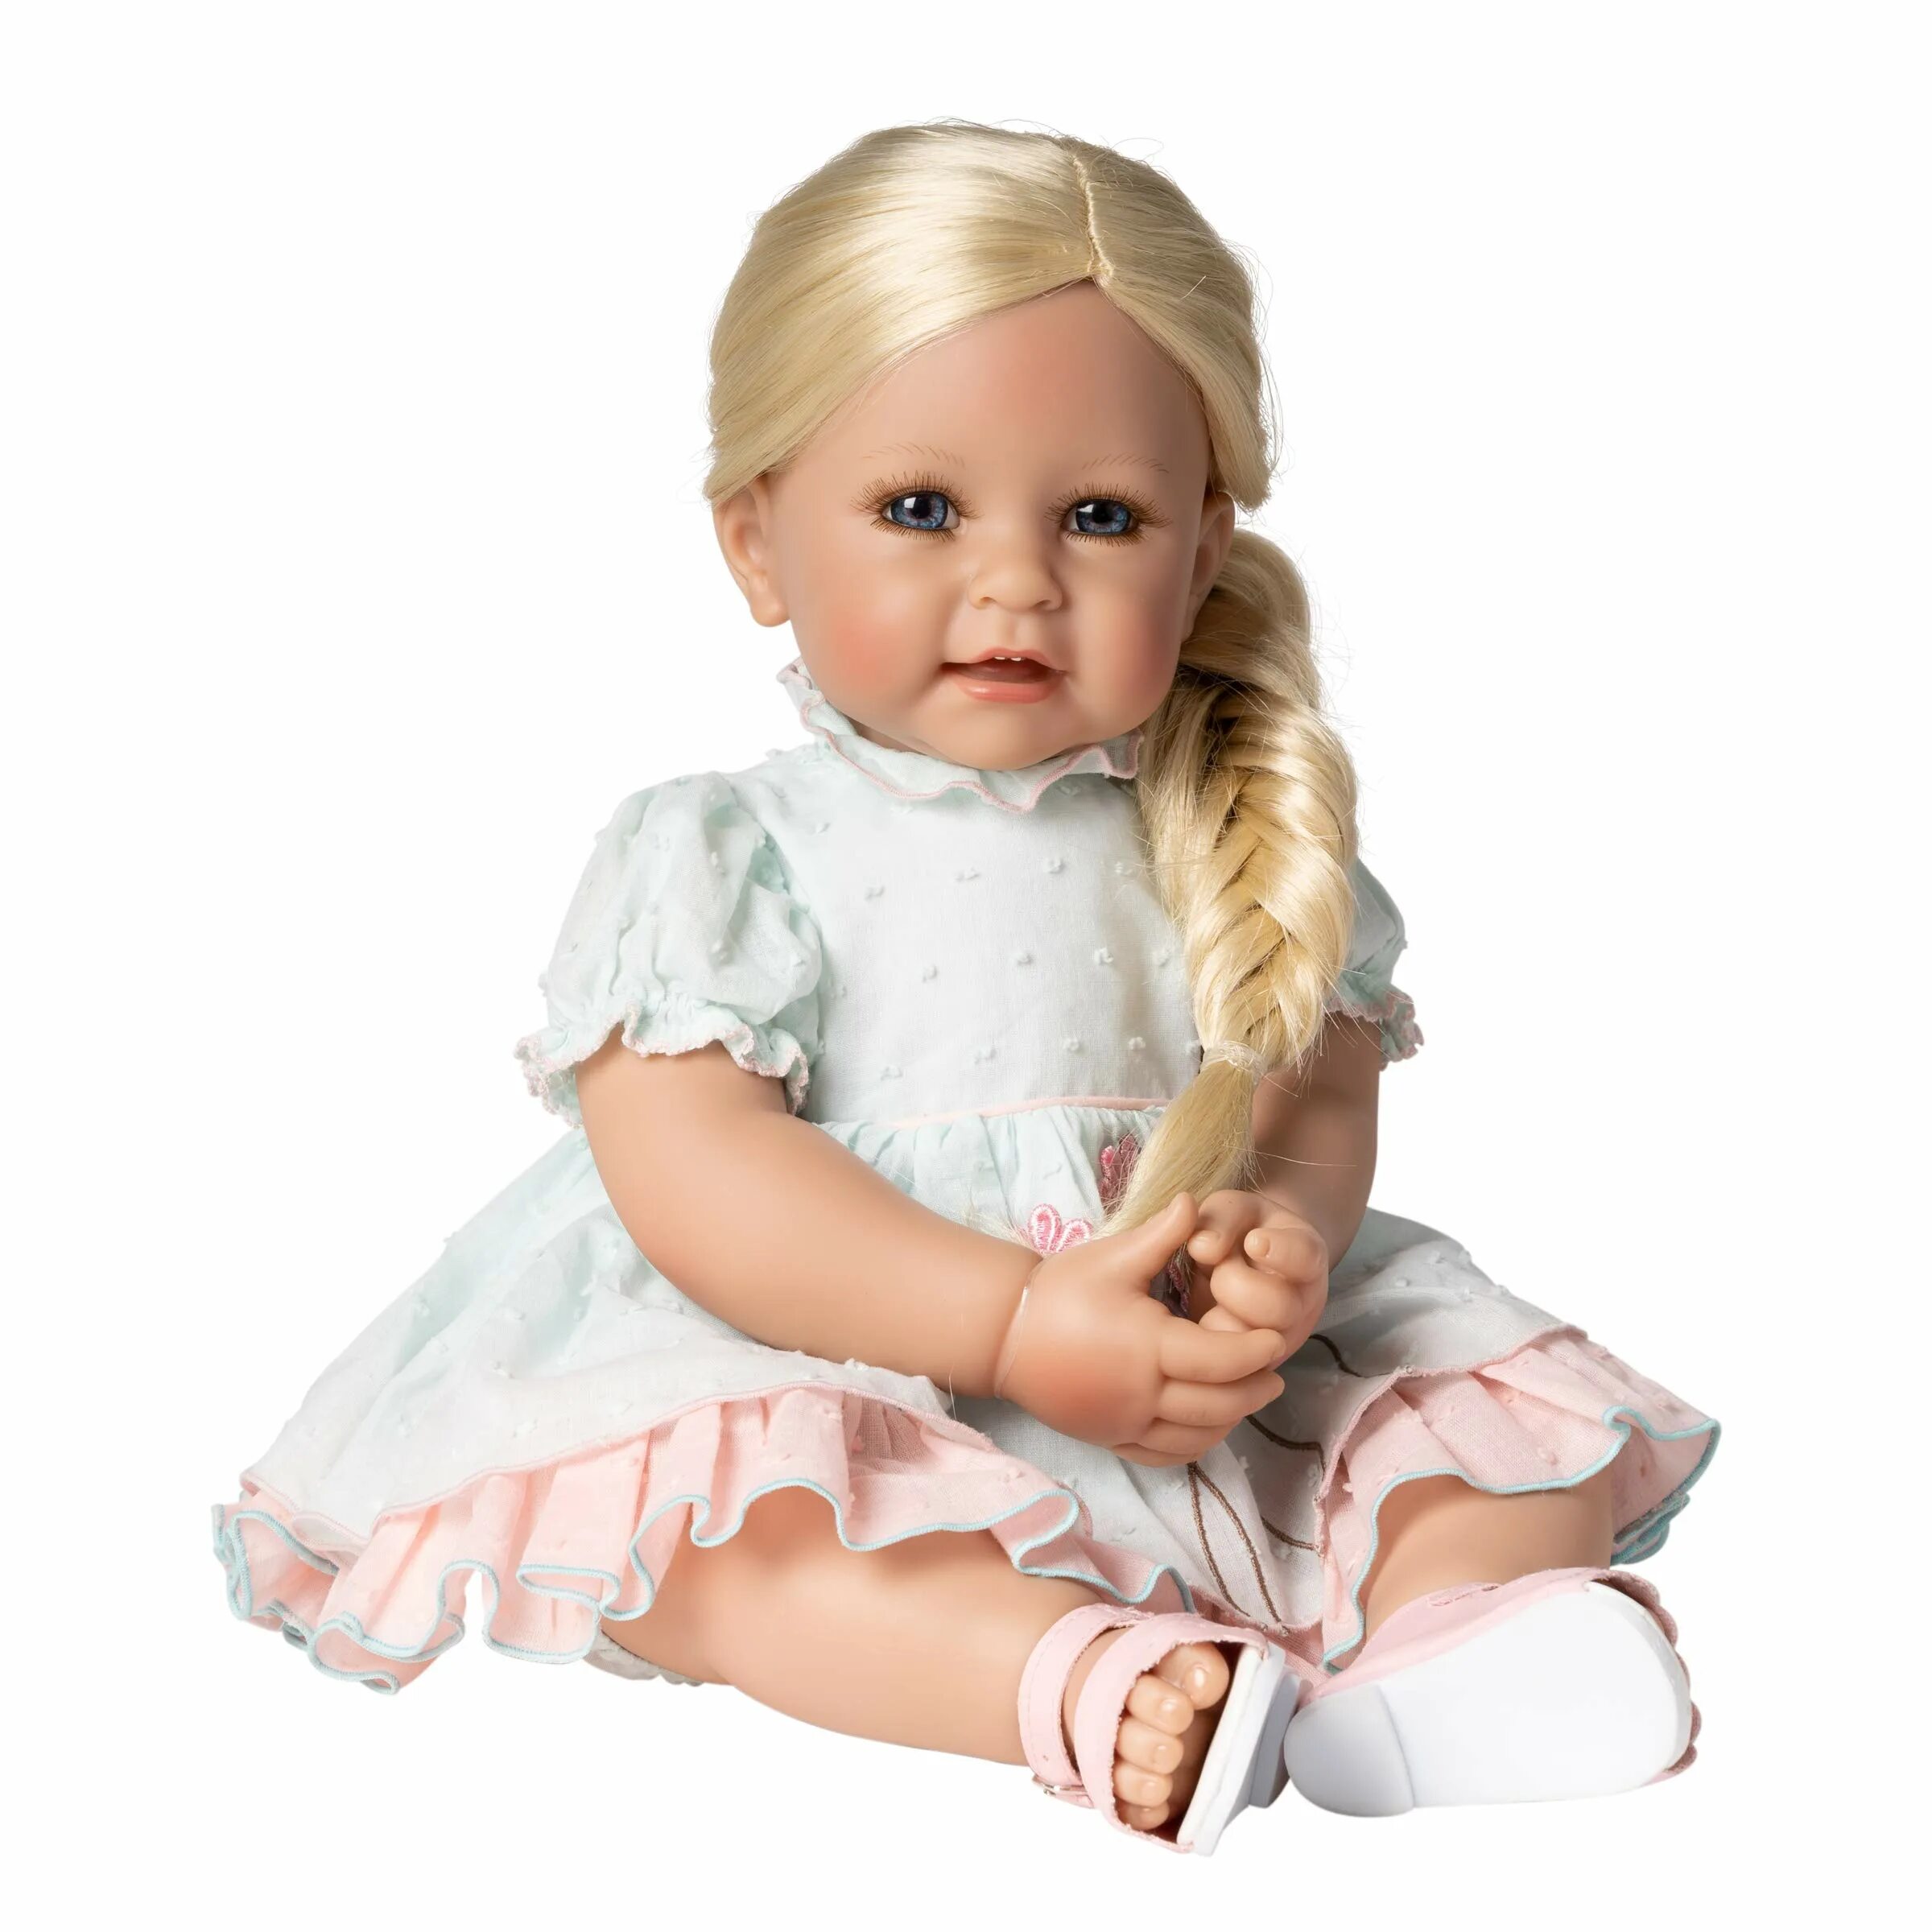 Адора воткисон. Кукла Адора принц Джордж. Клубные кукла adora Emma. Блондиночка Адора.